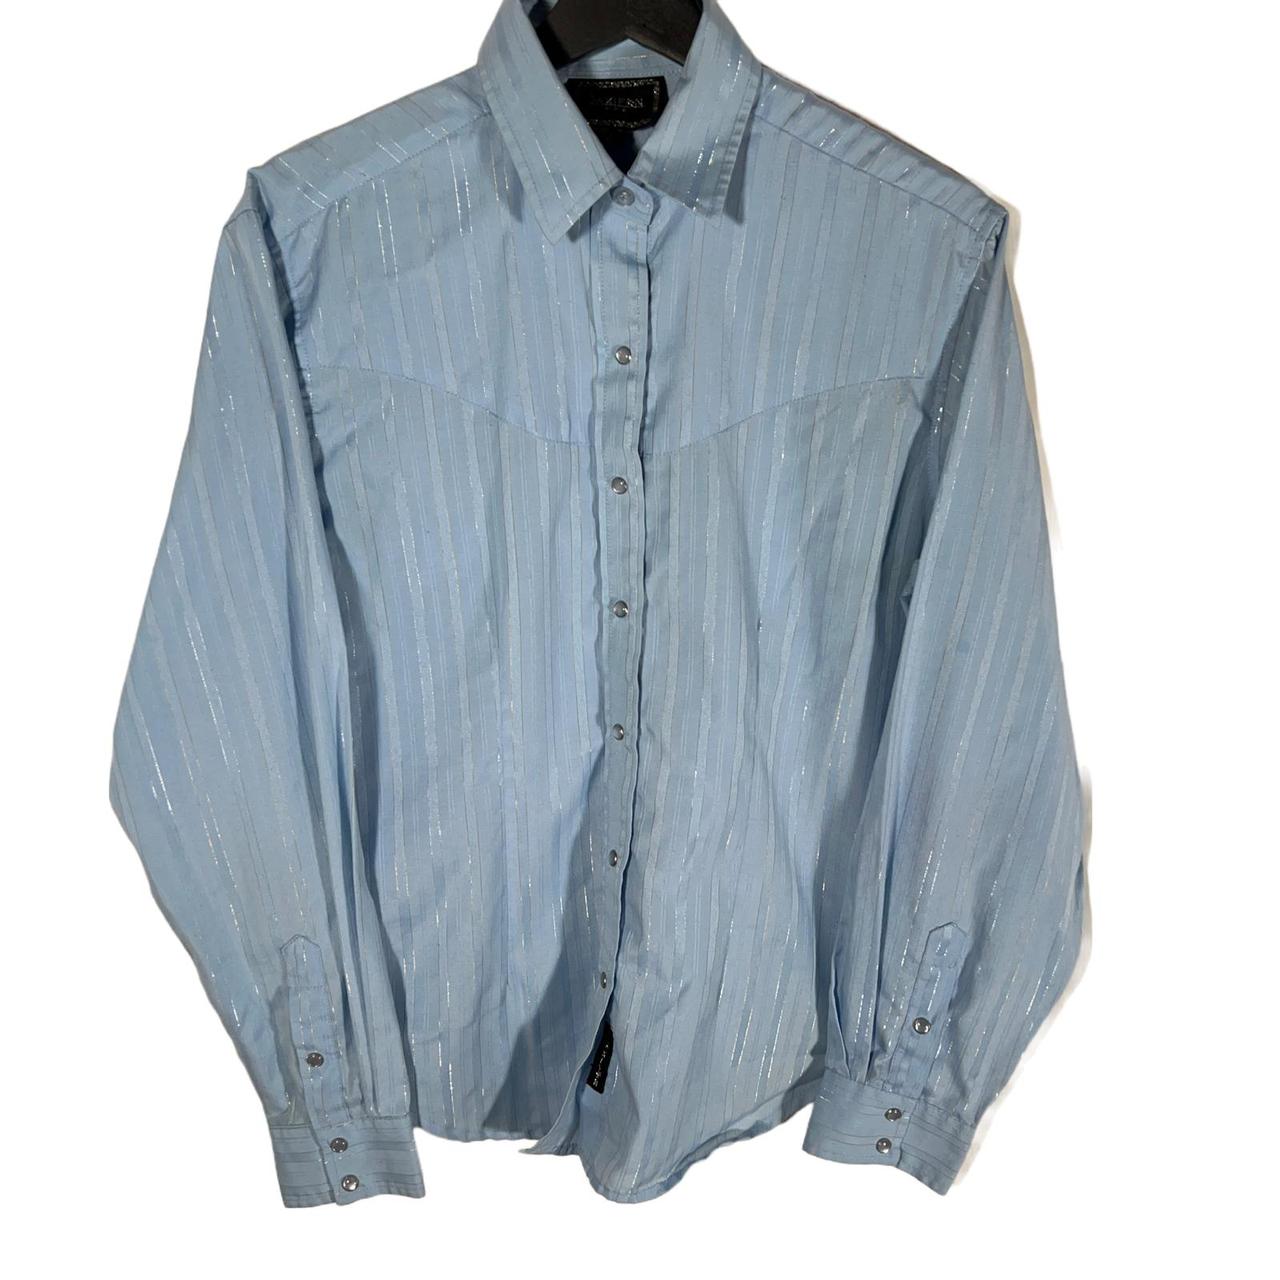 Product Image 1 - 1980s Saxifon Western Shirt Blue